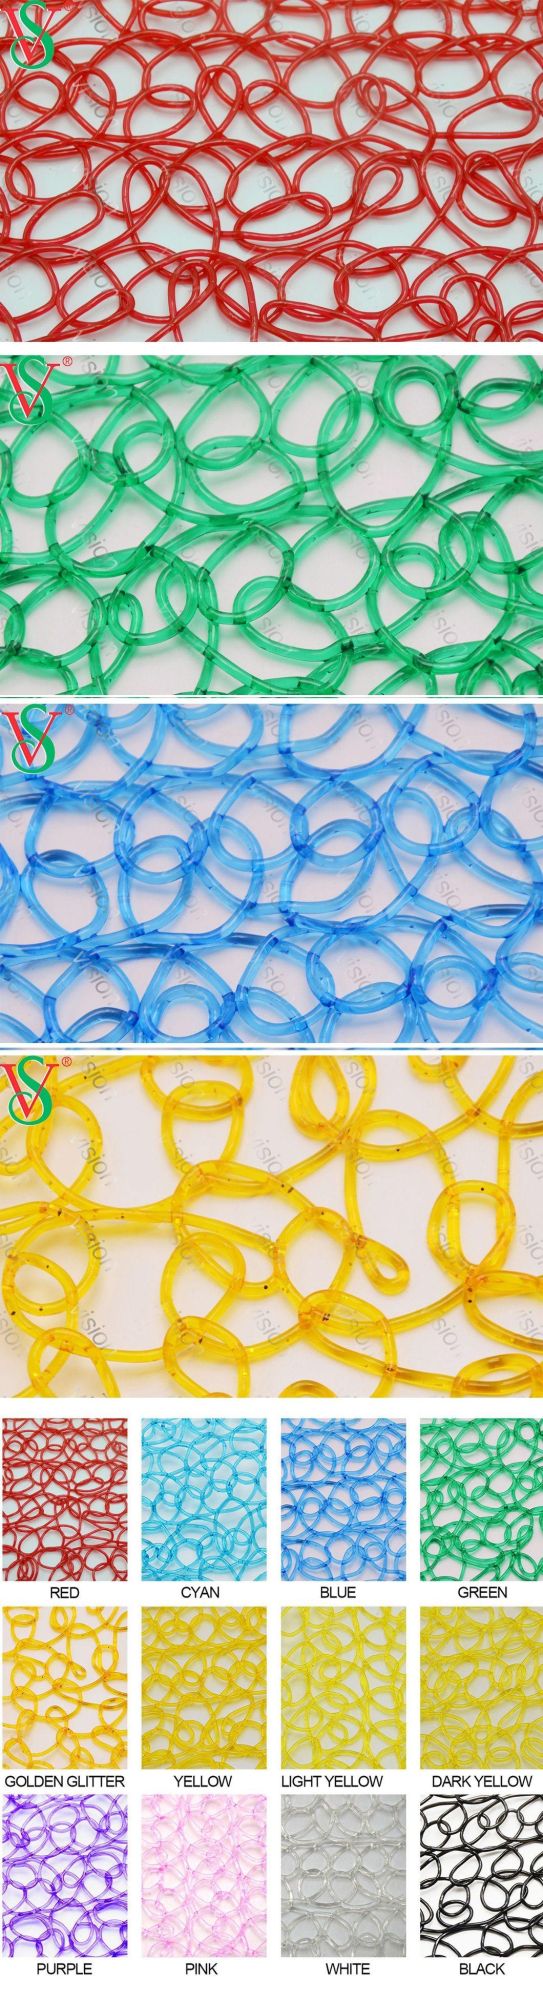 UV Resistance Outdoor Use Colorful Carpet PVC Mesh Net Material for 2D/3D Motif Light